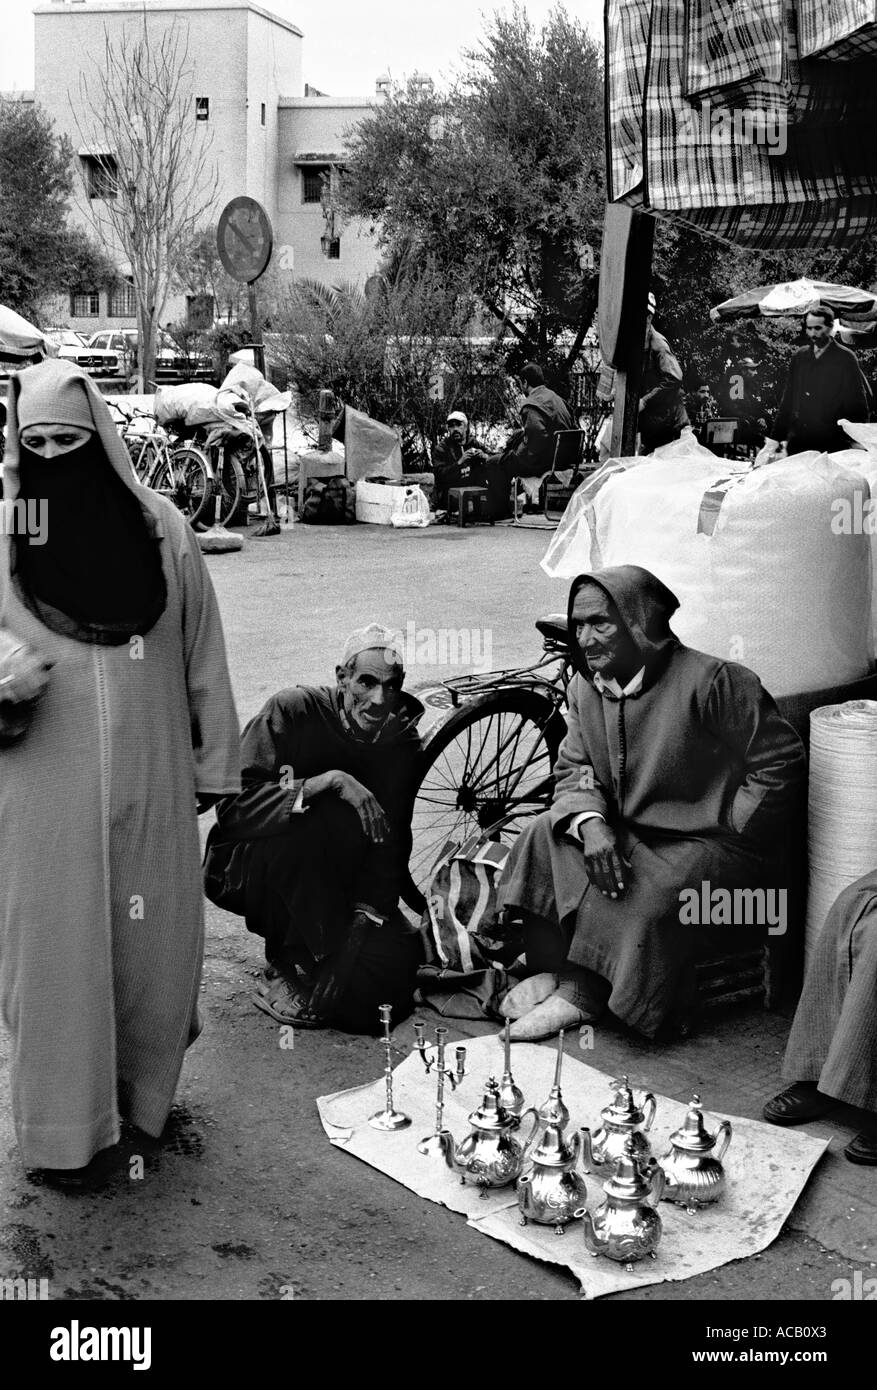 Street of Marrakech medina Morocco Stock Photo